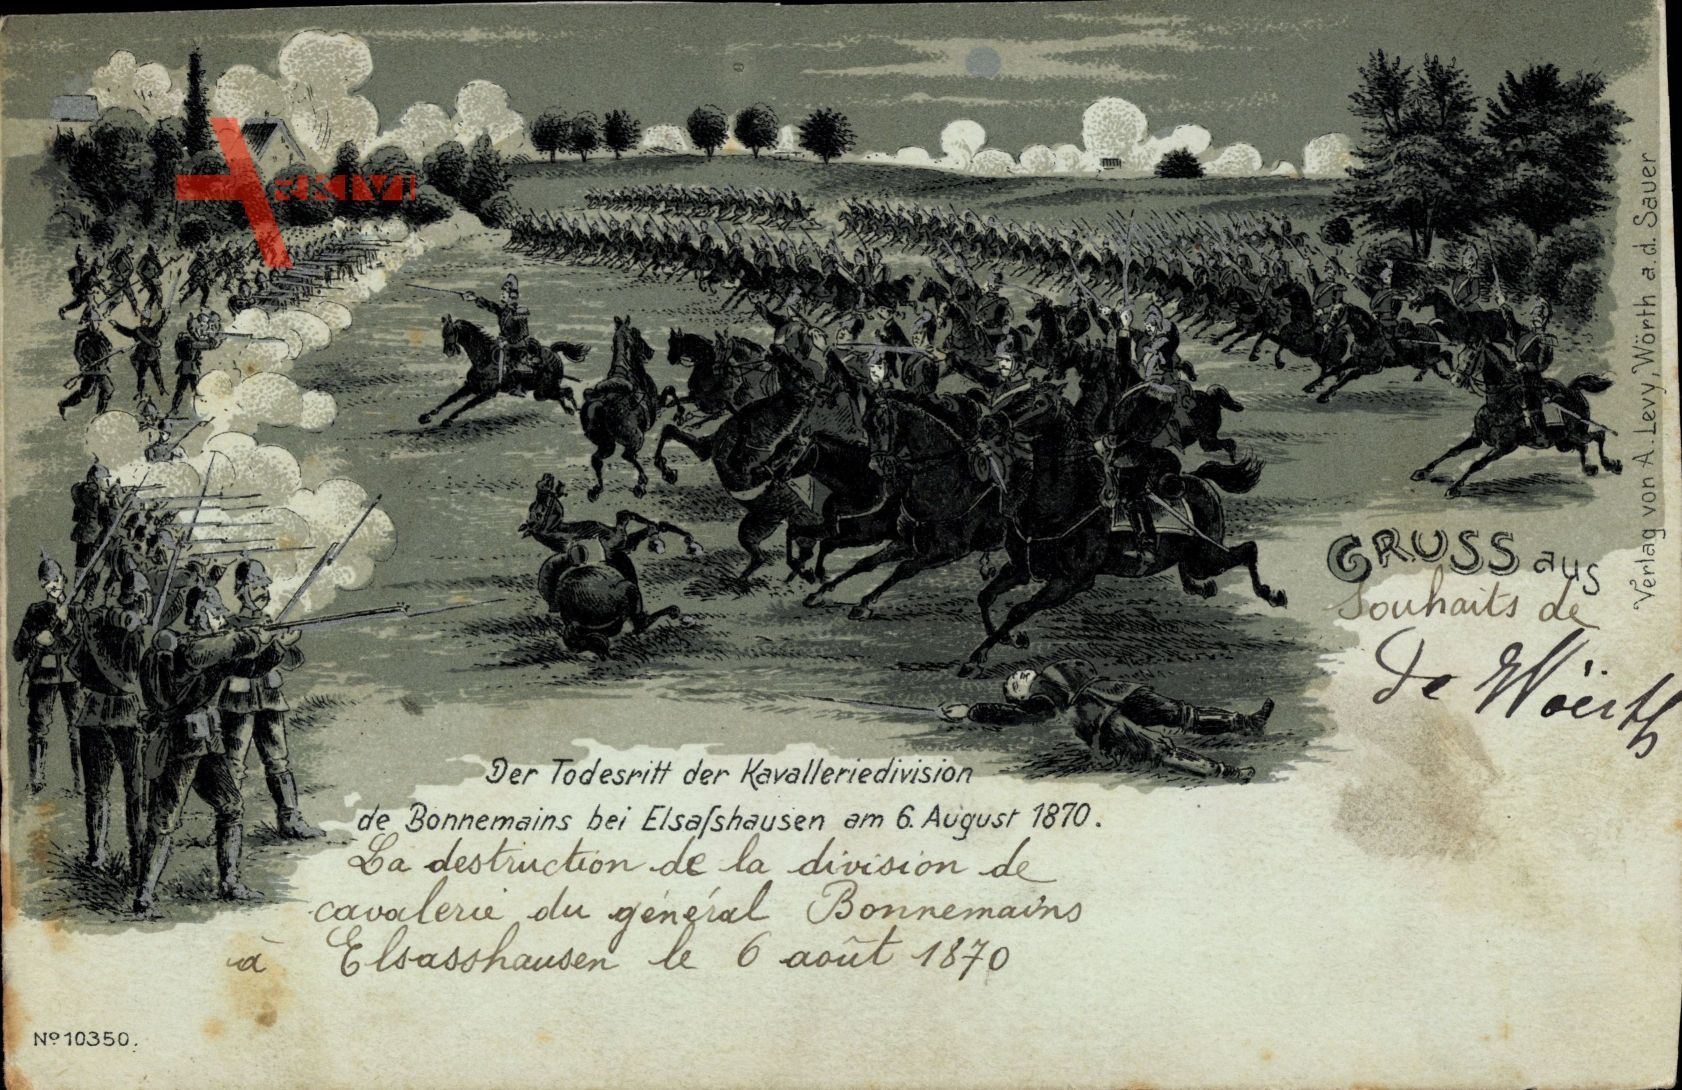 Elsaßhausen Bas Rhin, Todesritt der Kavalleriedivision de Bonnemains 1870